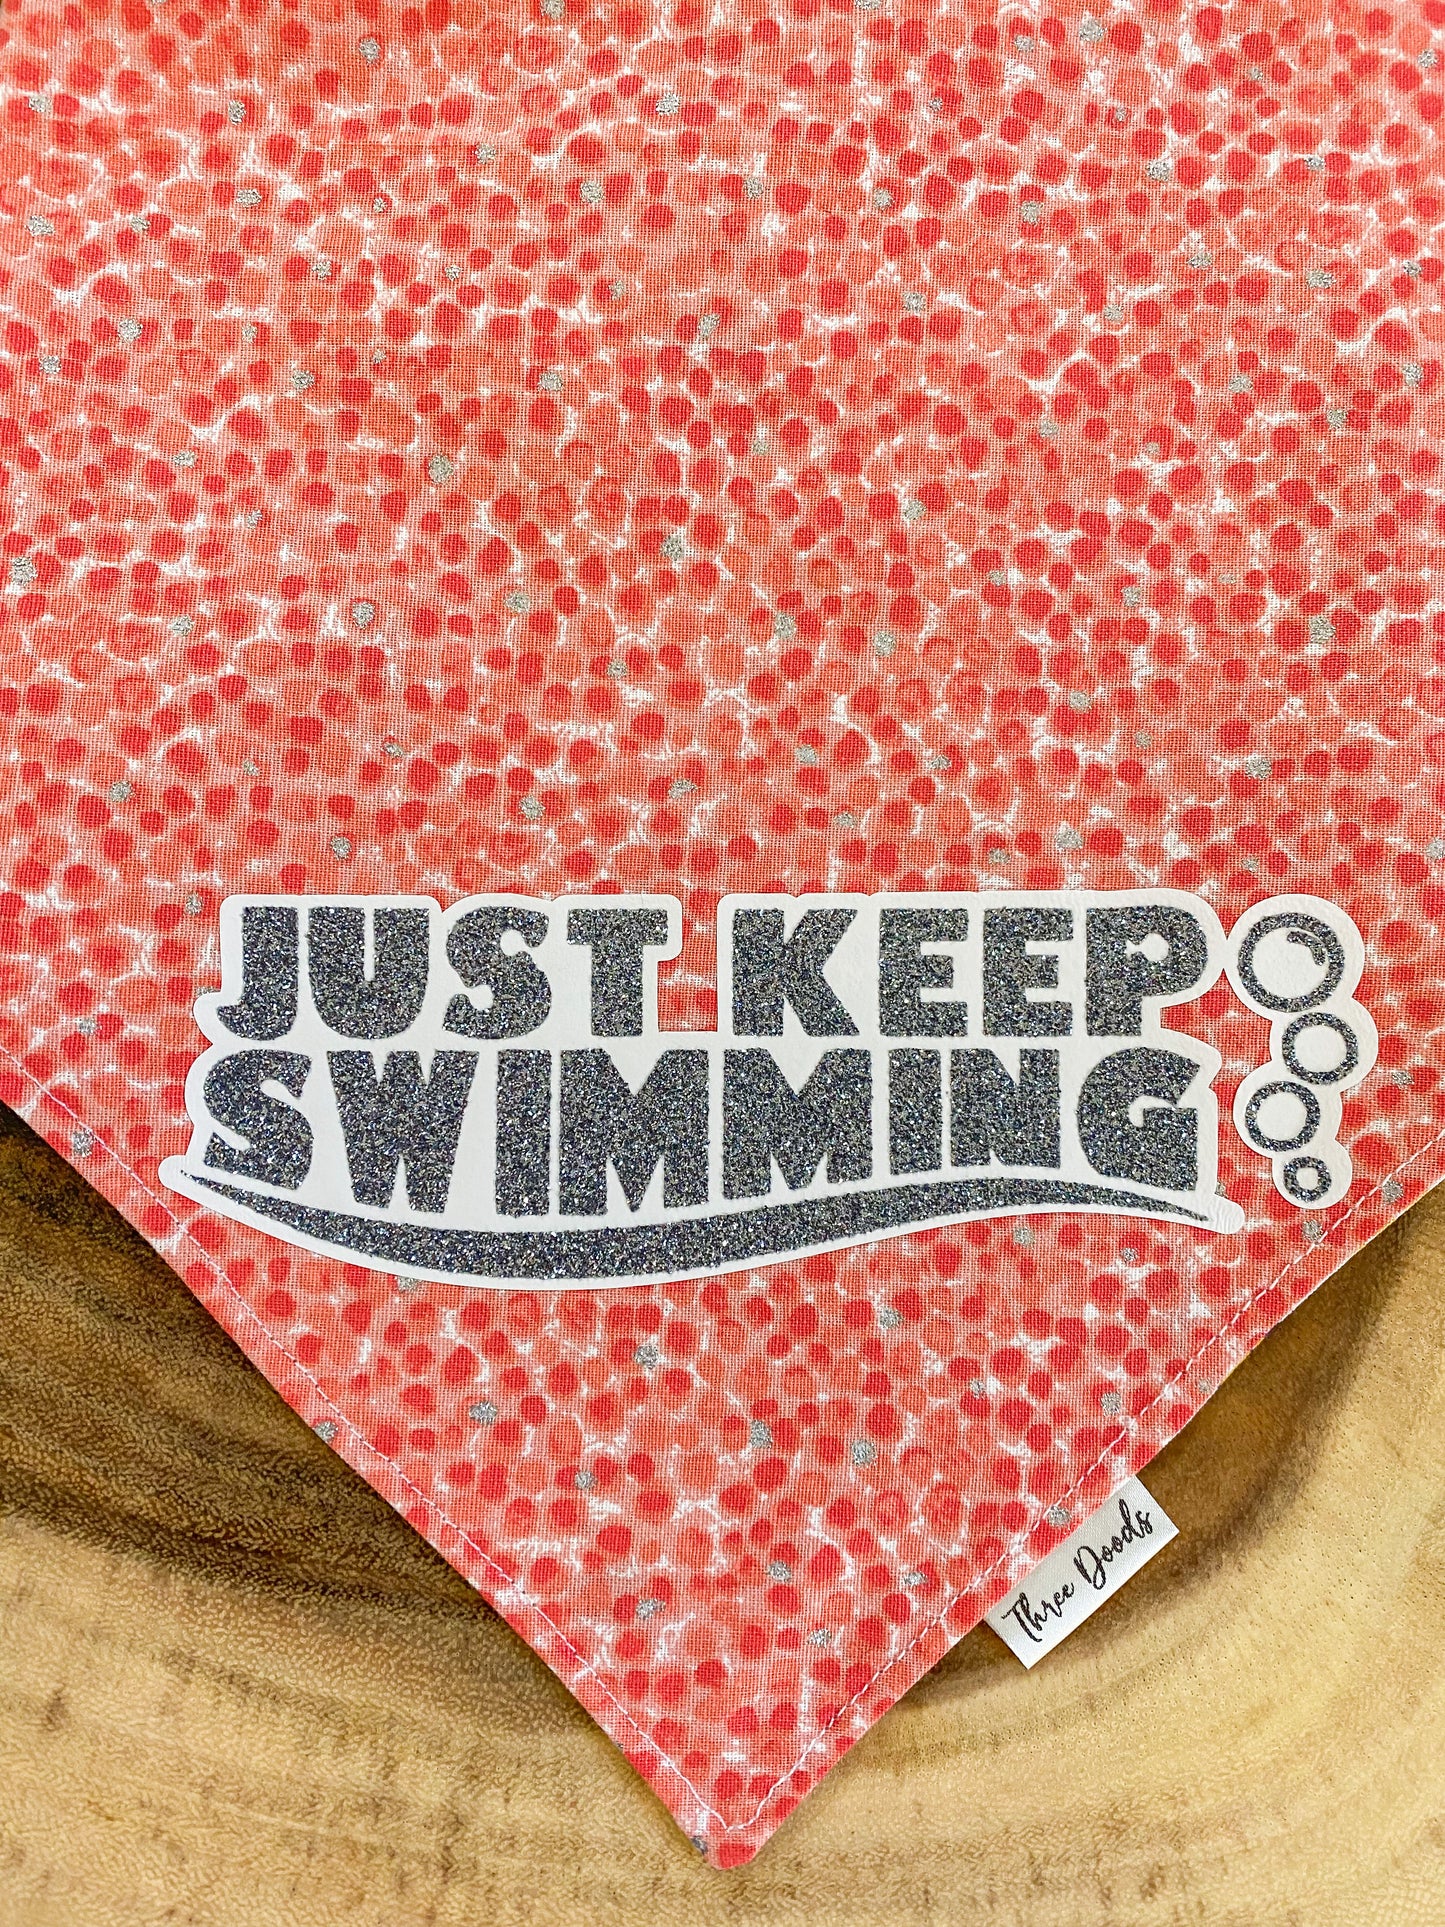 keep swimming Vinyl Add-on